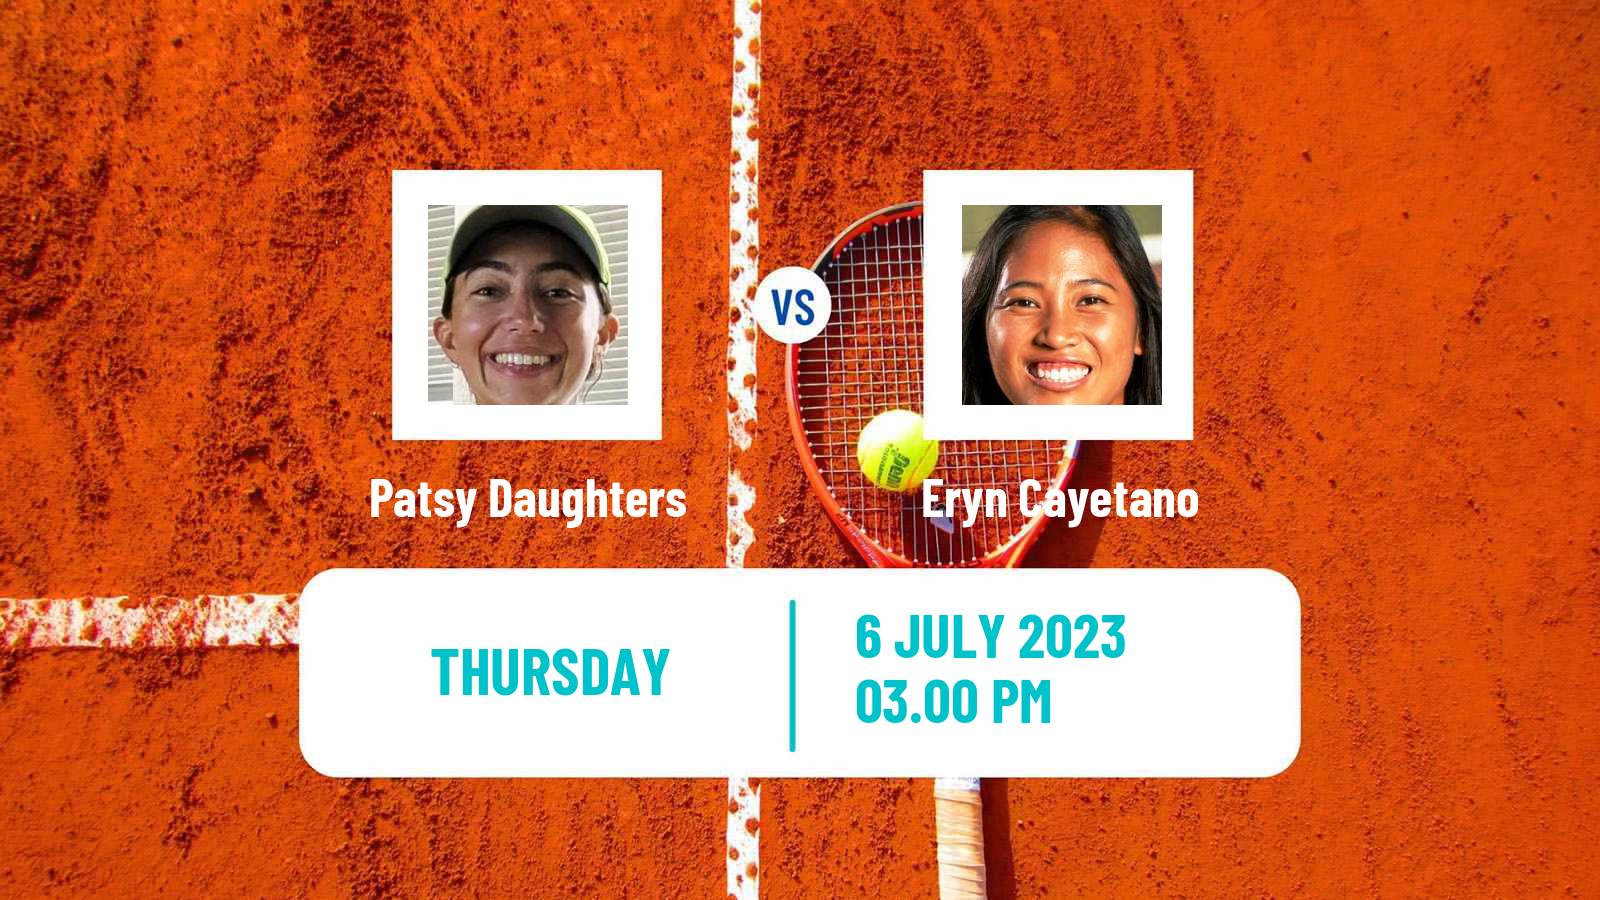 Tennis ITF W15 Lakewood Ca Women Patsy Daughters - Eryn Cayetano